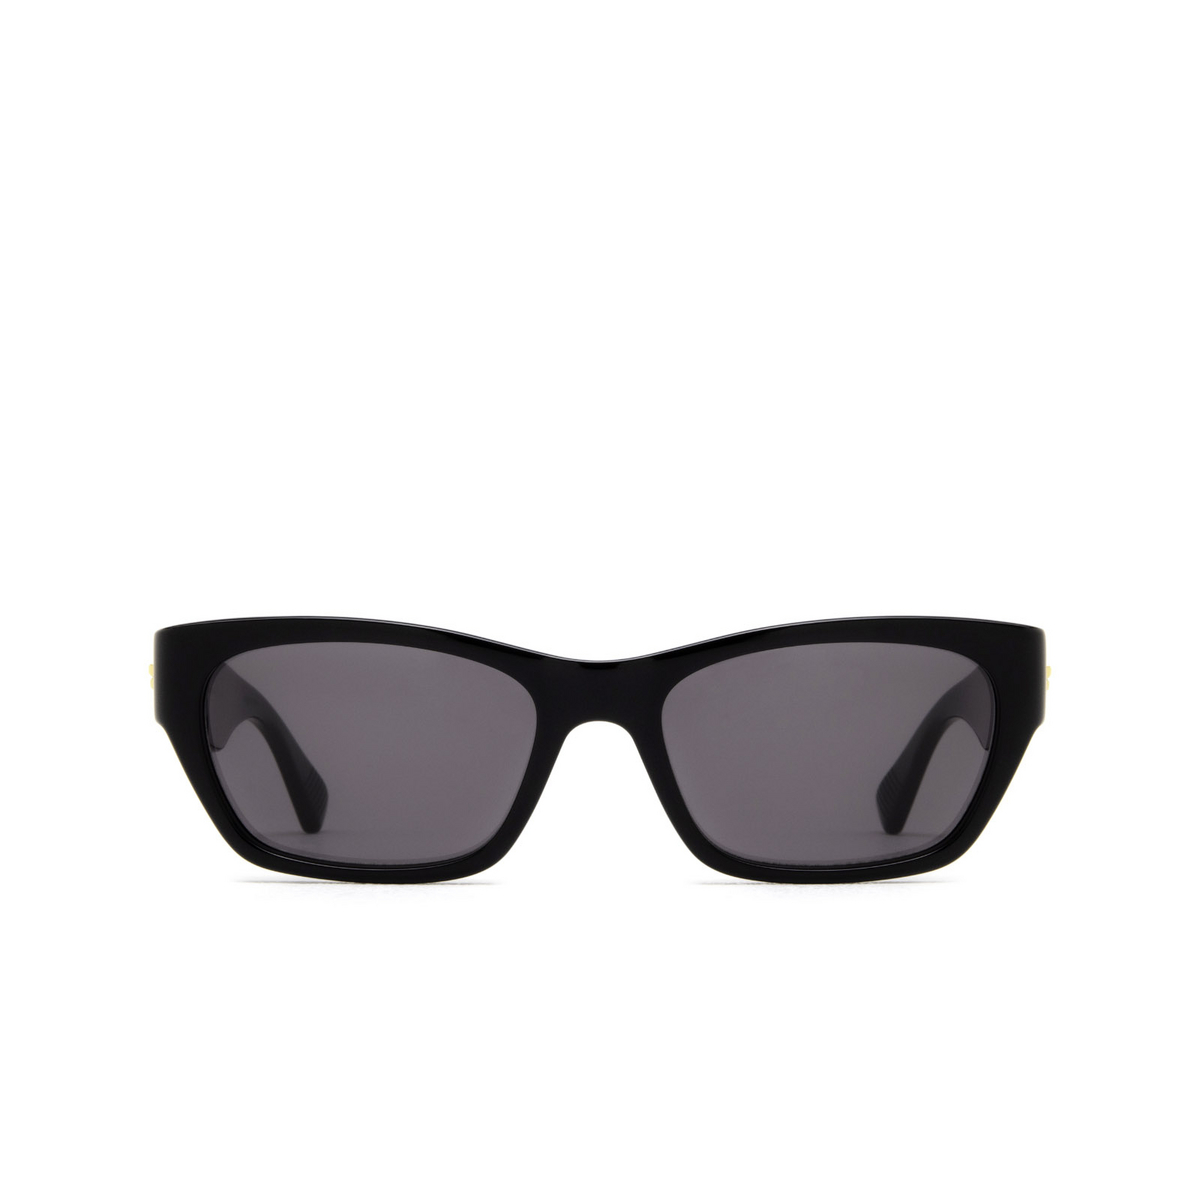 Bottega Veneta® Cat-eye Sunglasses: BV1143S color Black 001 - front view.